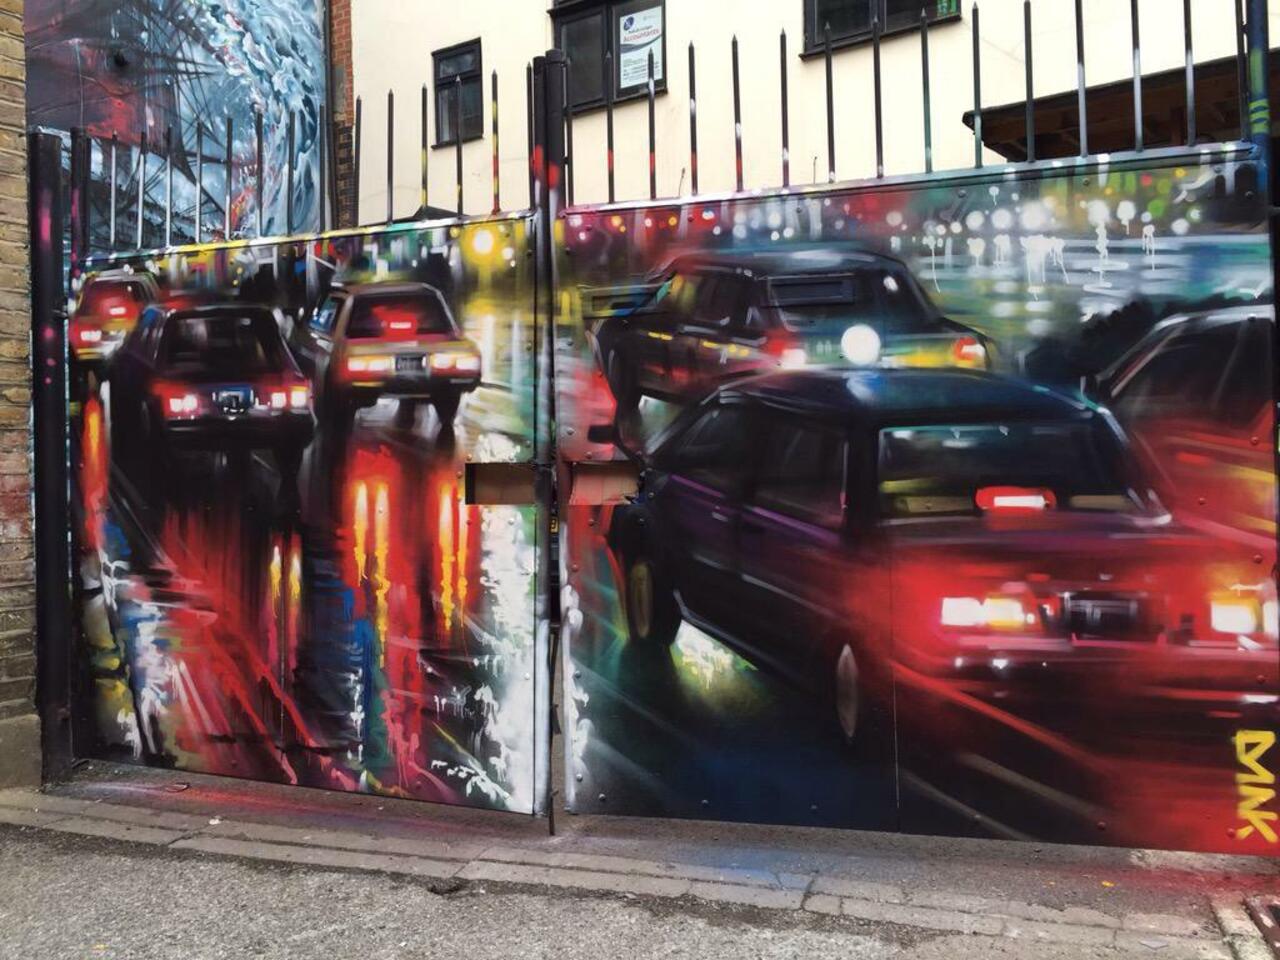 New Street Art by DanKitchener in Brick Lane London 

#art #graffiti #mural #streetart http://t.co/sAsNHgOvWs